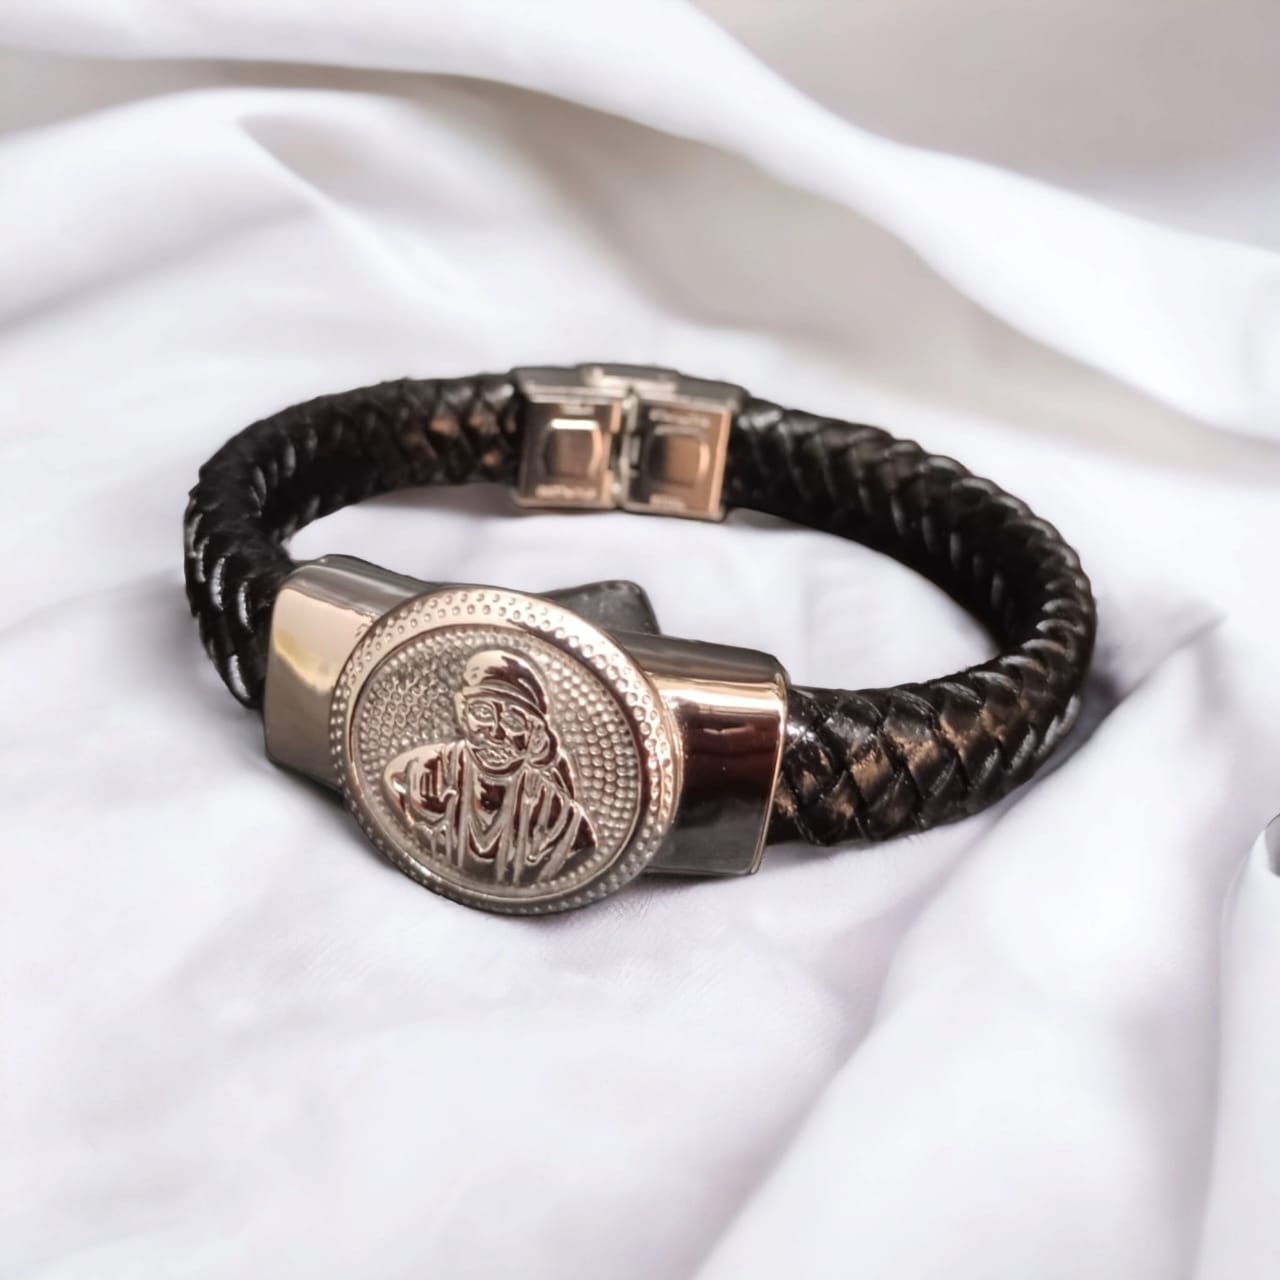 Jack Marc New Sai Baba Devotional Silver Bracelet For Men